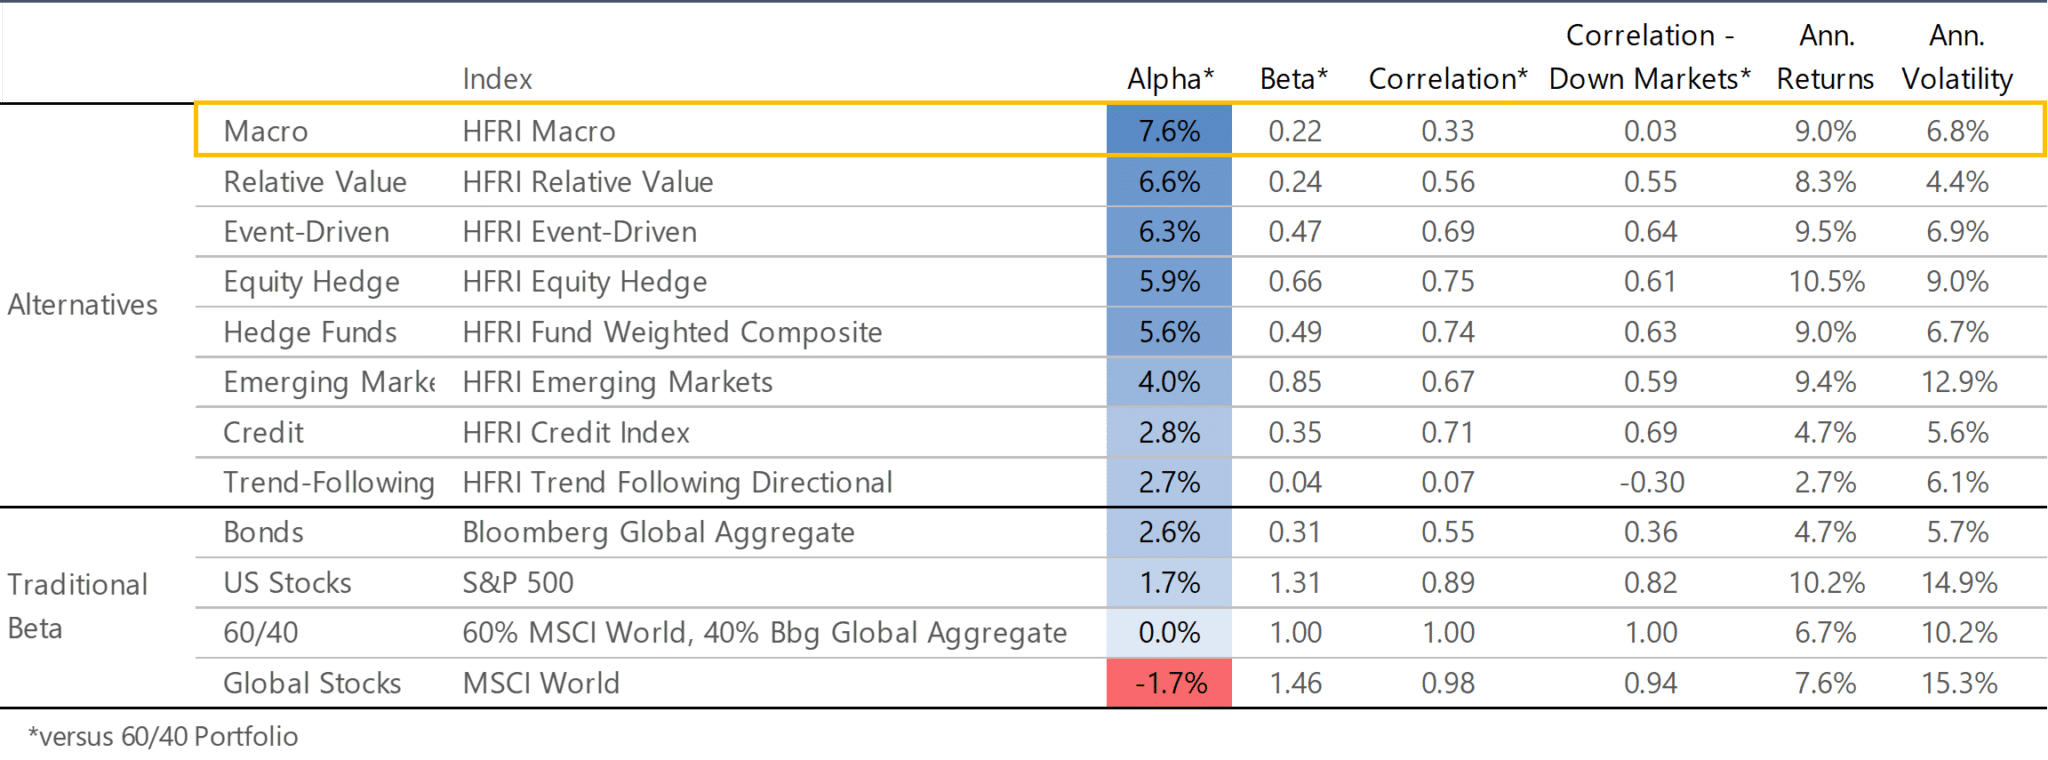 Summary Statistics Table: Alpha, Beta, Correlation, Correlation in Down Markets, Returns, Volatility